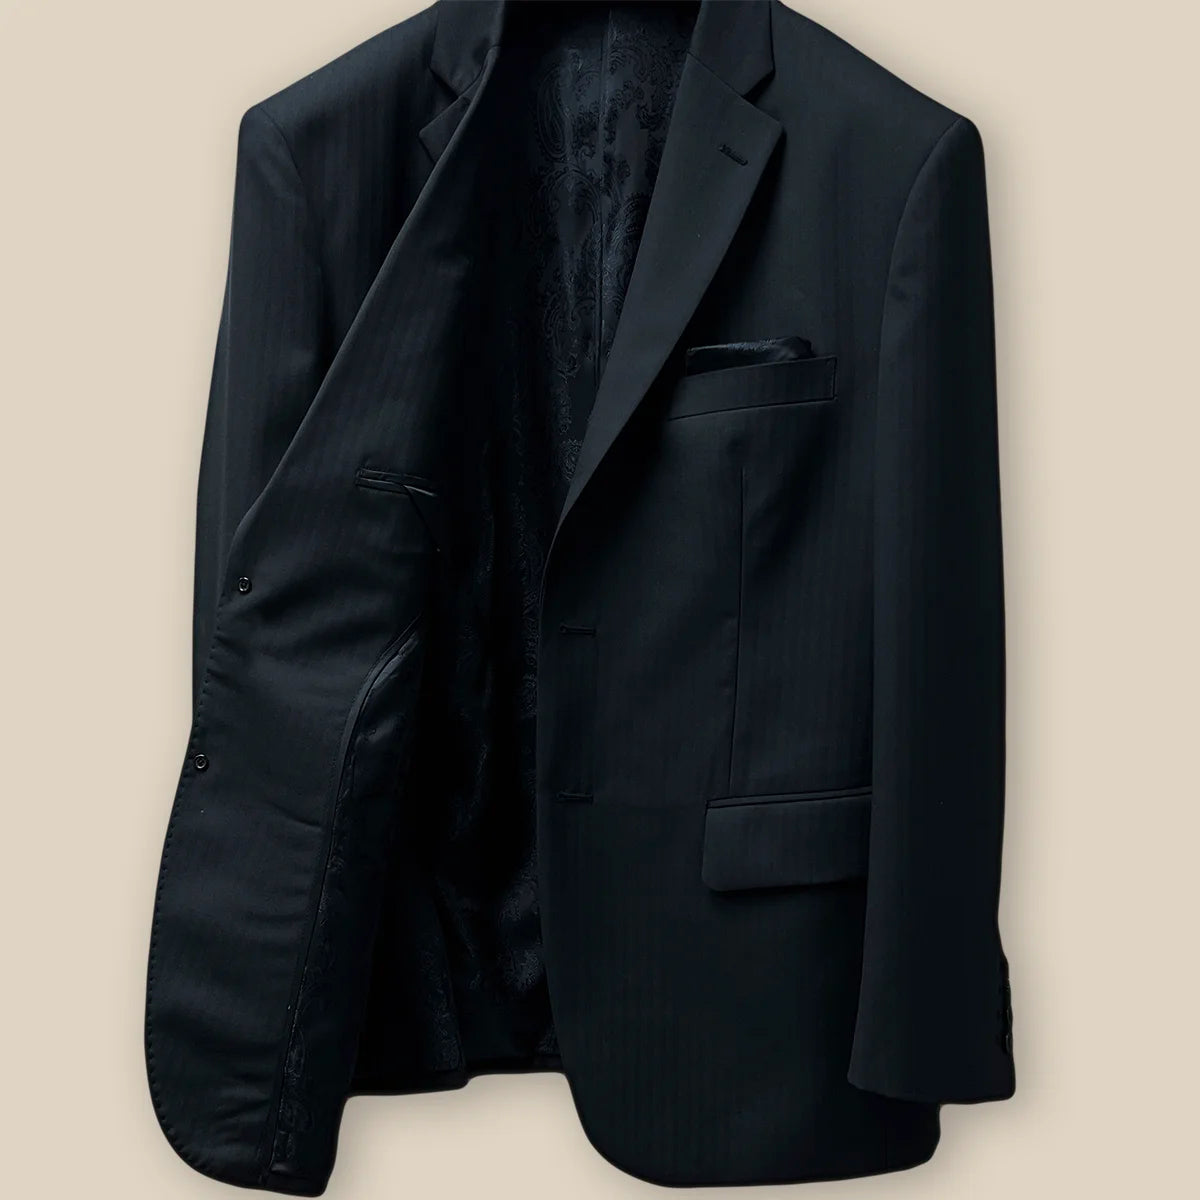 Right inside view of a black herringbone men's suit.